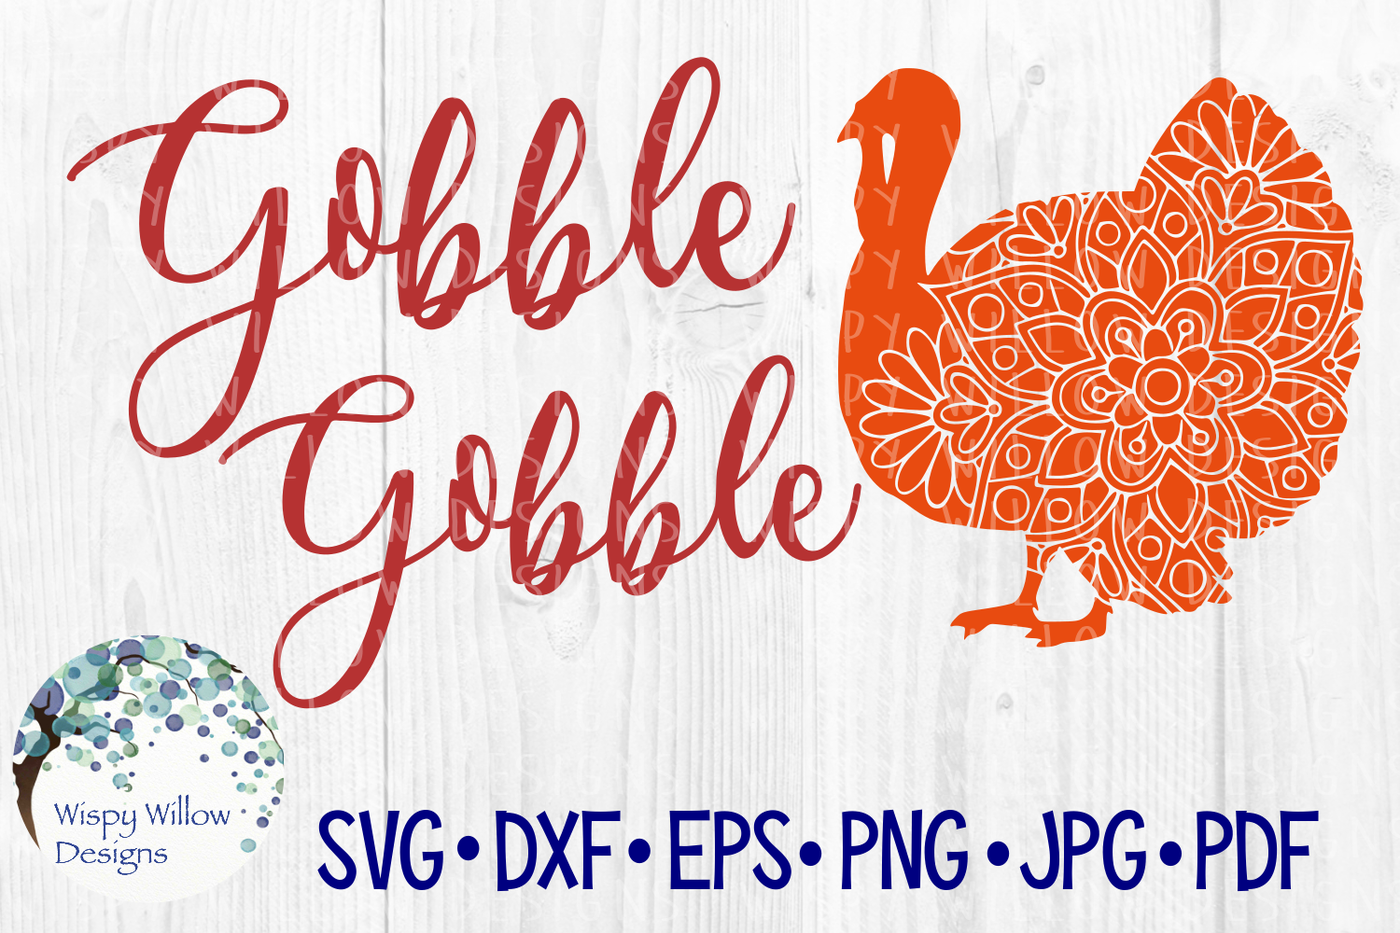 Download Gobble Gobble Mandala Turkey Thanksgiving Svg Dxf Eps Png Jpg Pdf By Wispy Willow Designs Thehungryjpeg Com